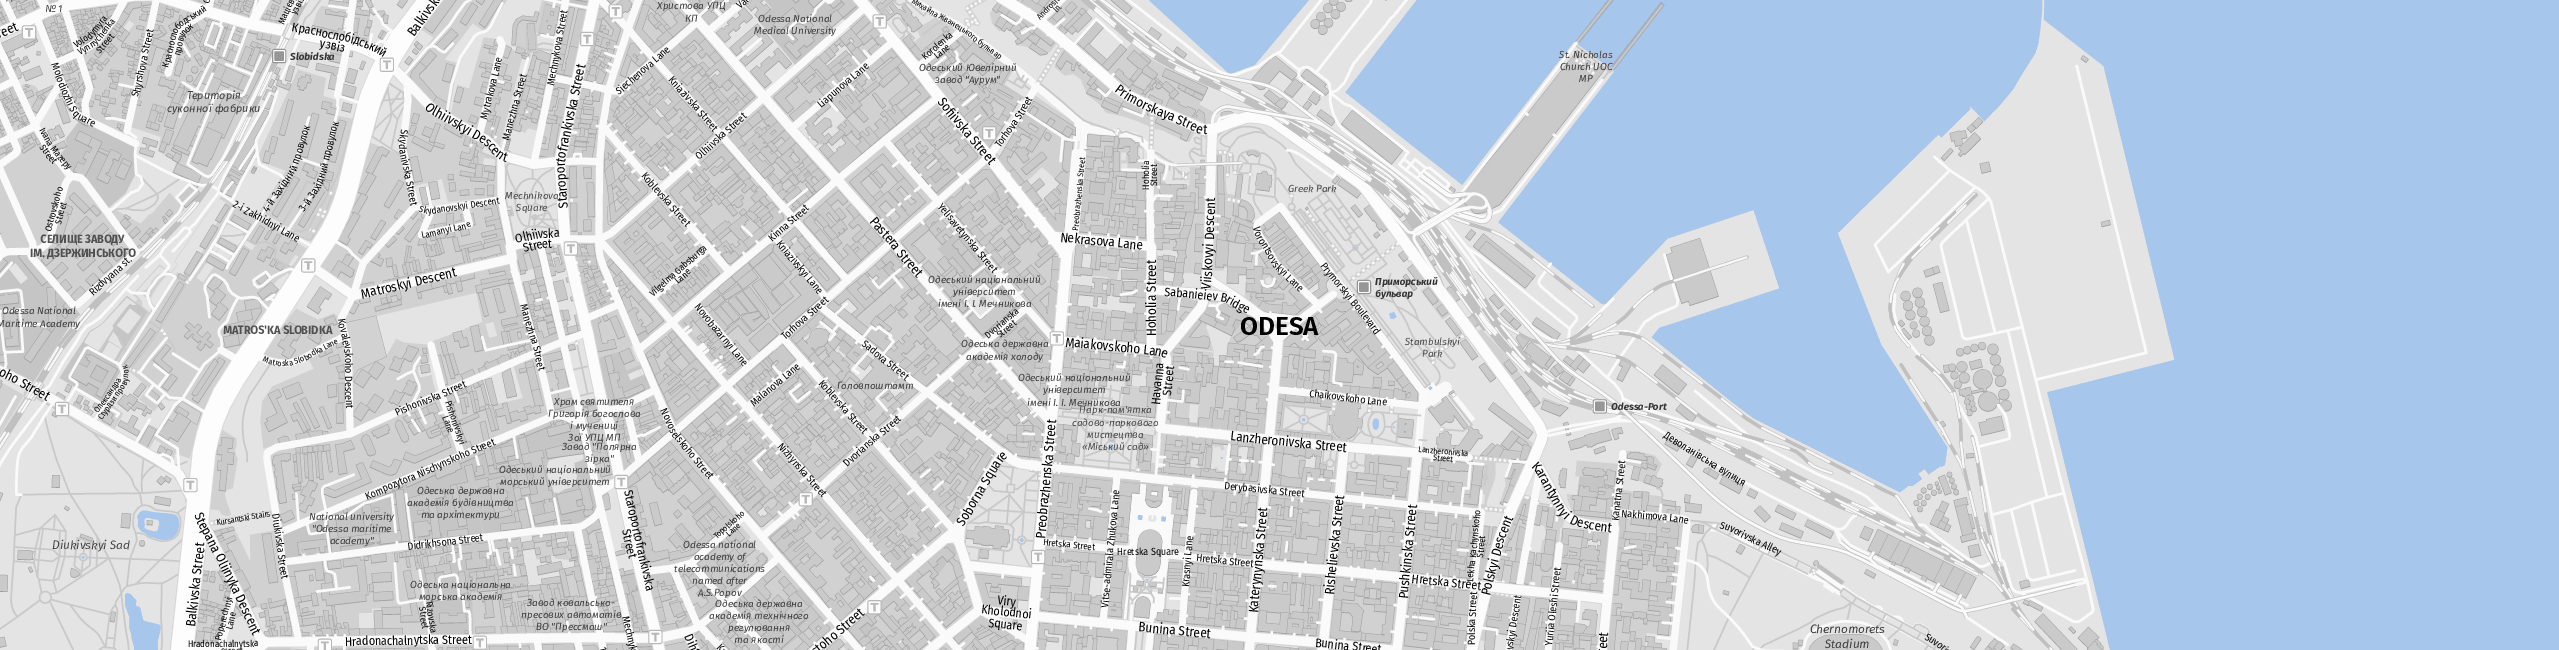 Stadtplan Odessa zum Downloaden.